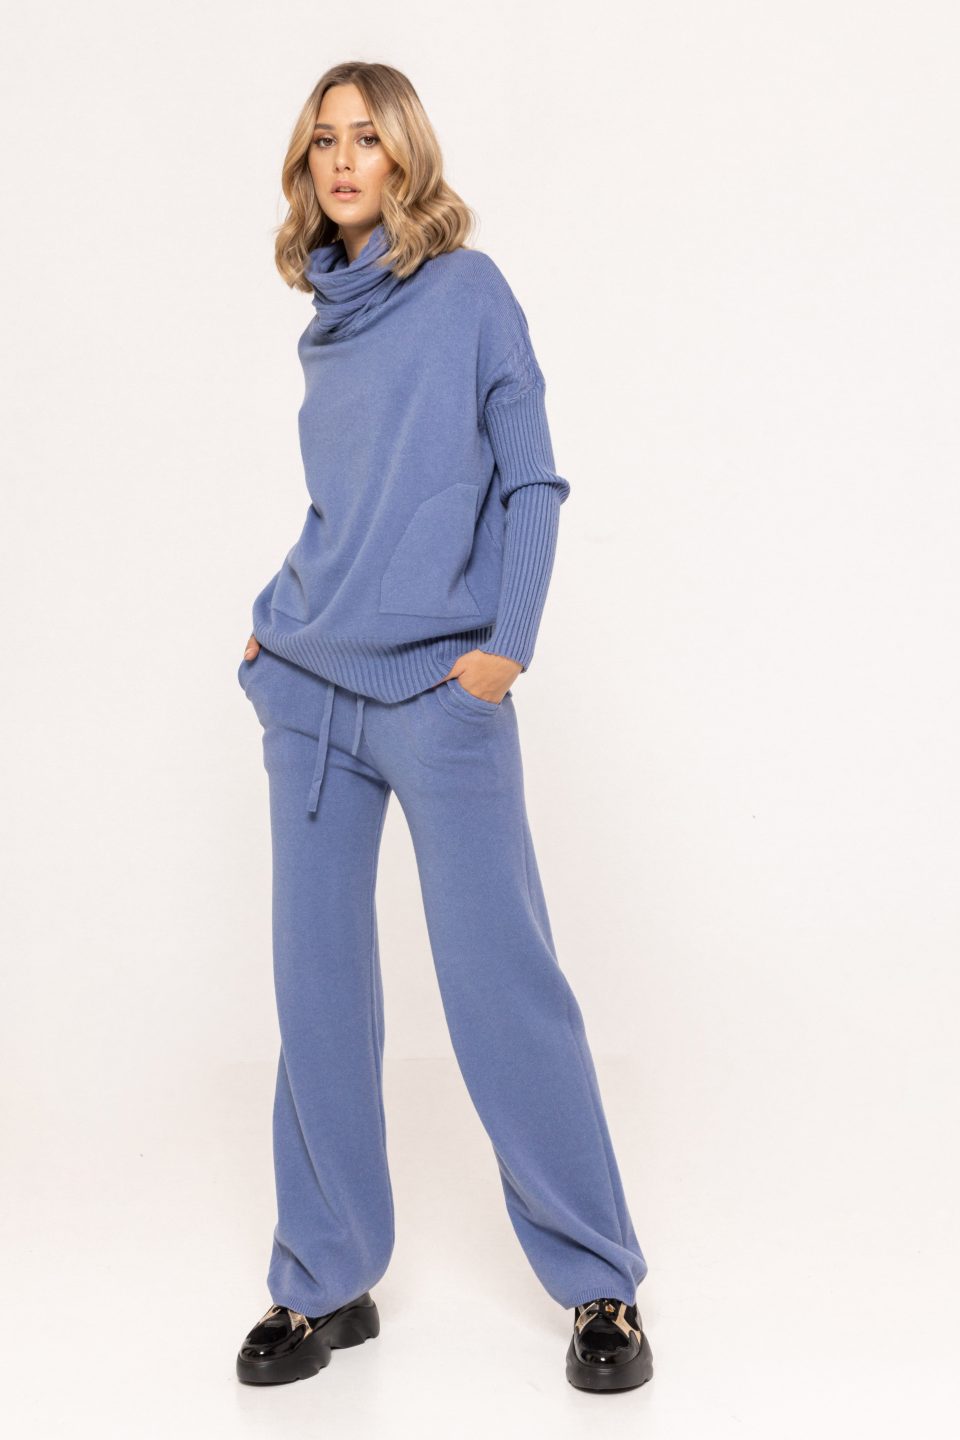 Pantalon-evazat-din-tricot-Amelia-bleu-ETIC-2